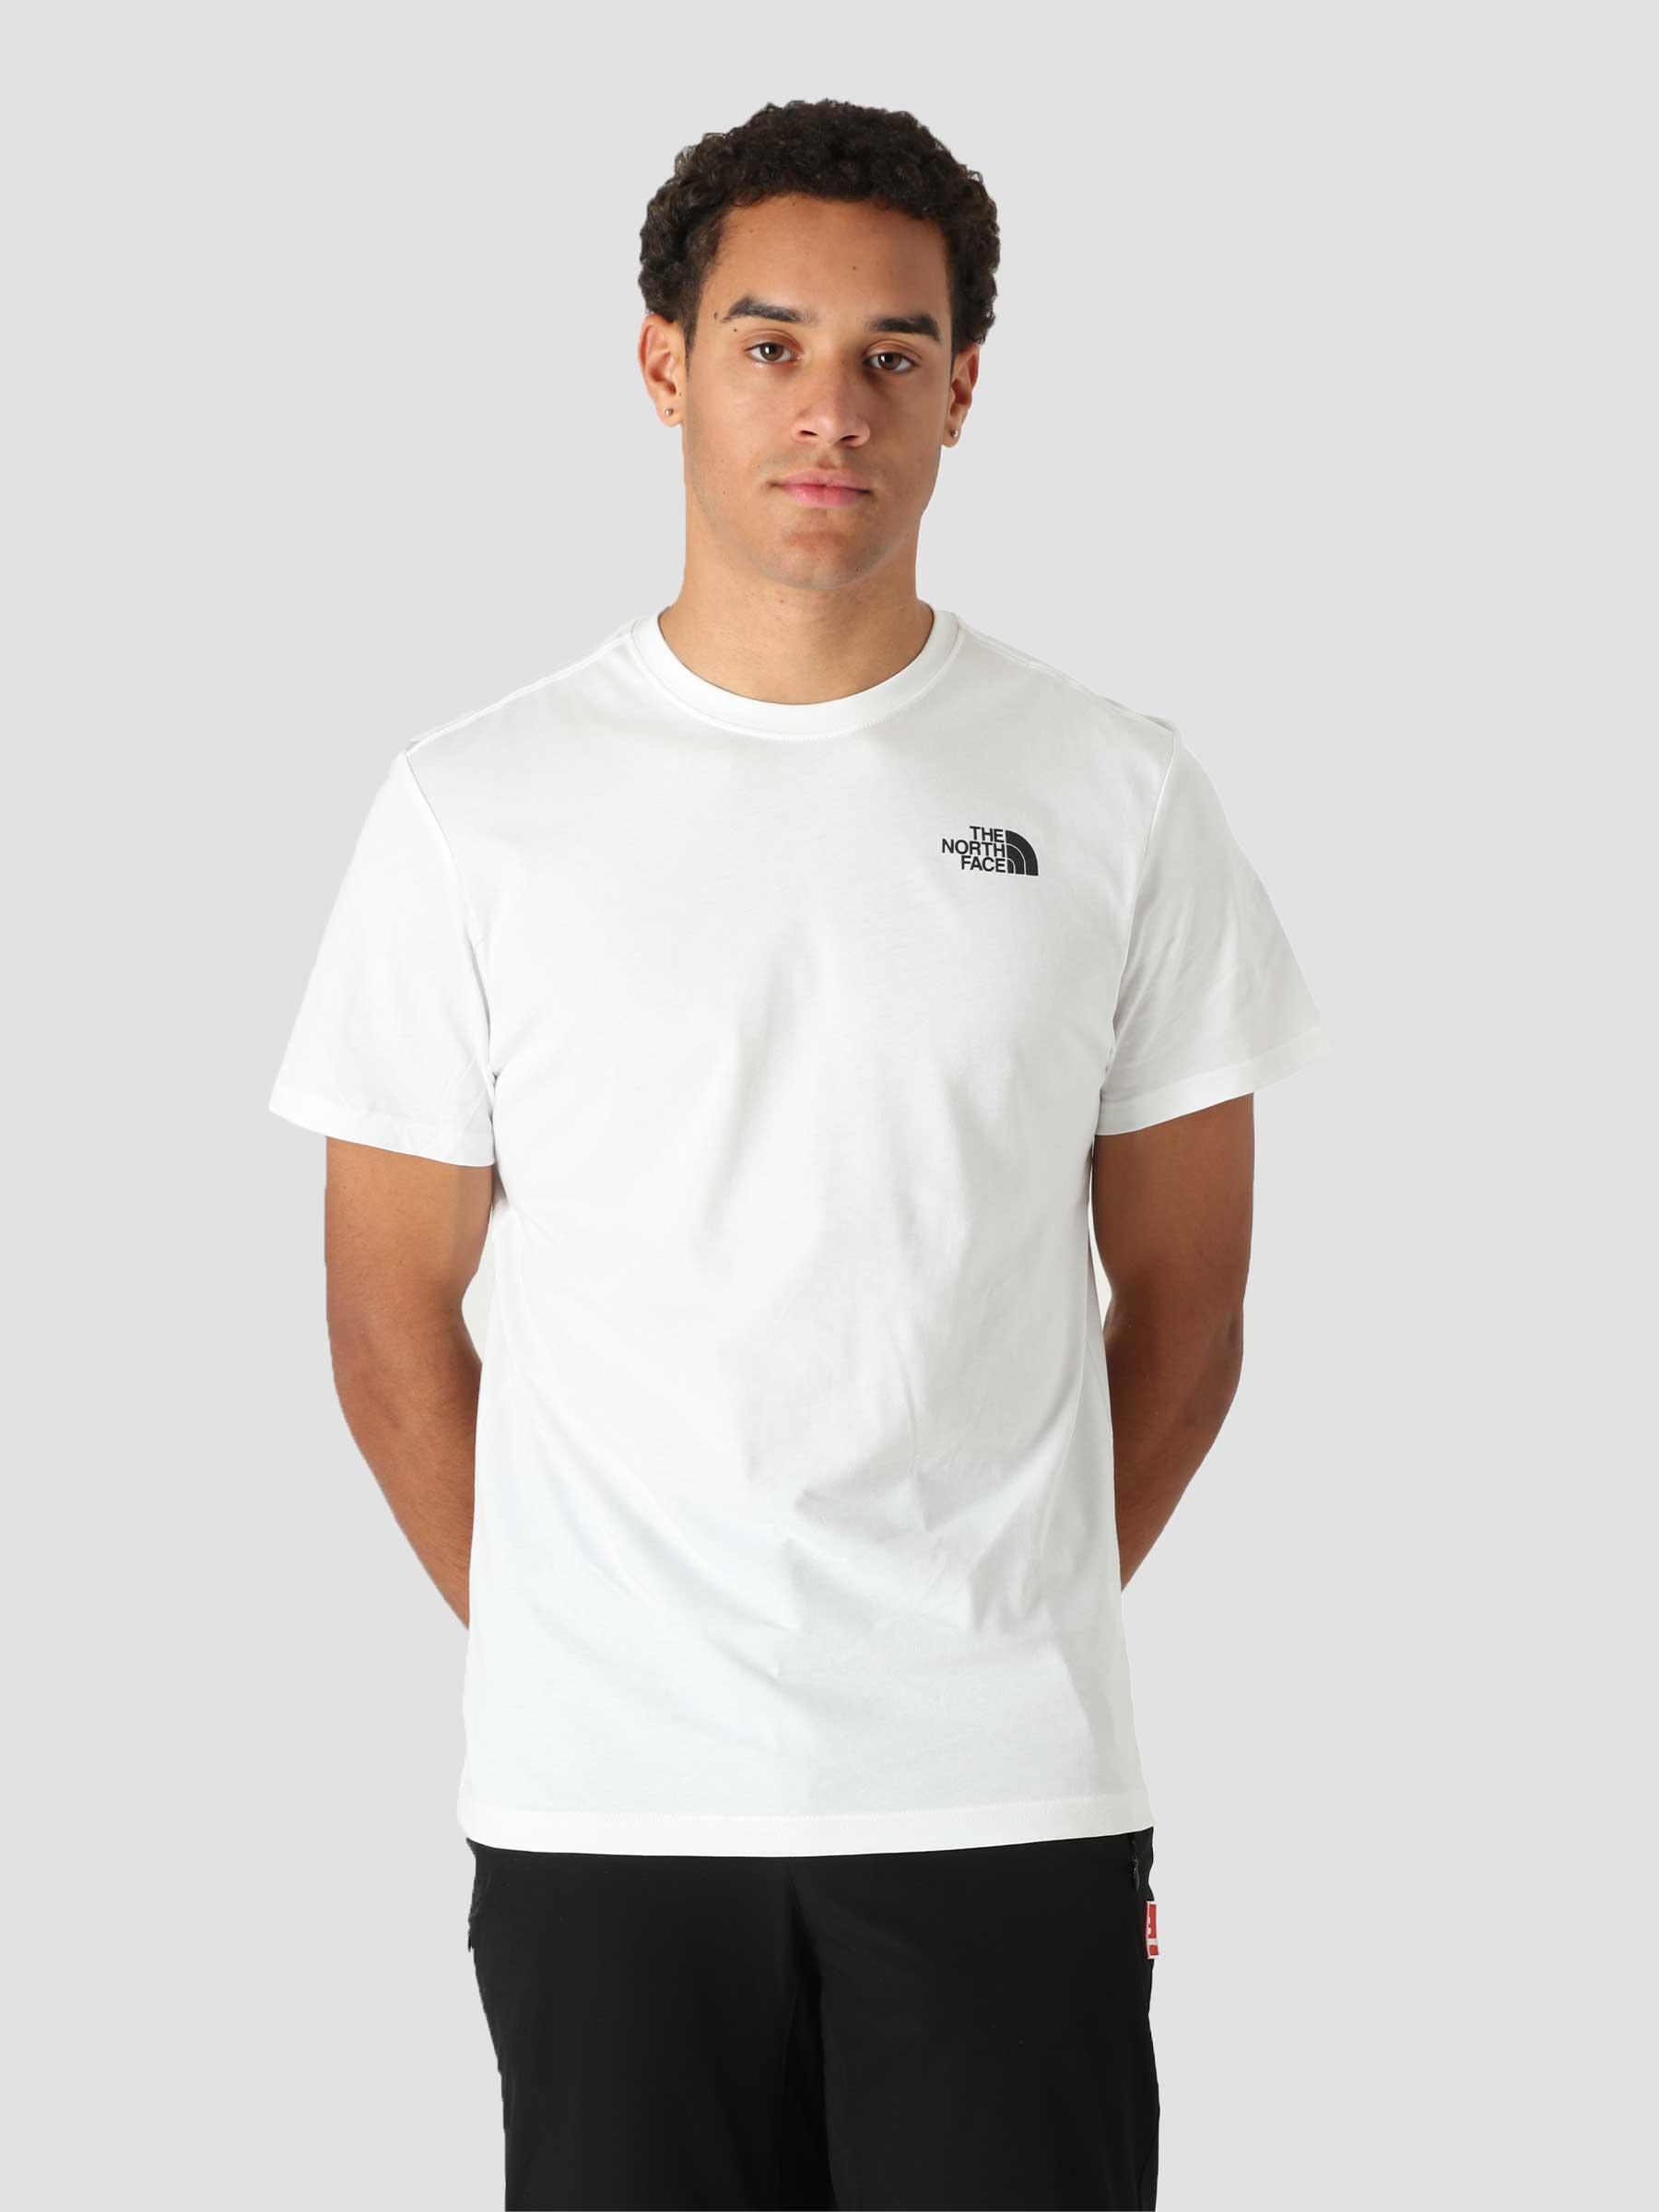 The North Face Redbox T-Shirt White - Freshcotton